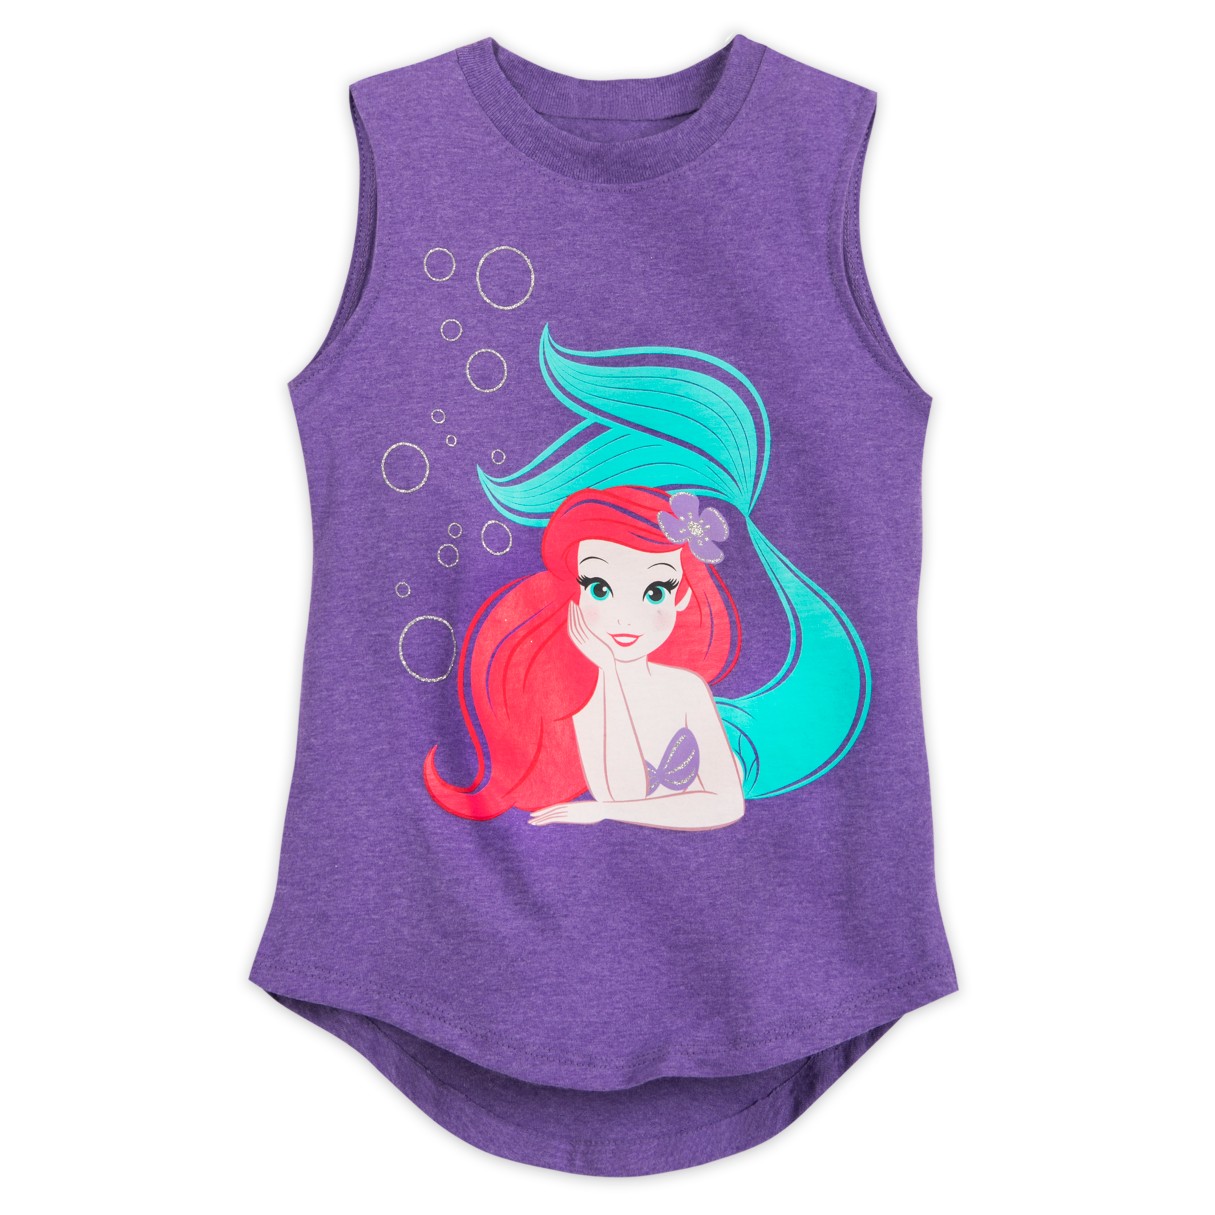 Ariel Tank Top for Girls – The Little Mermaid